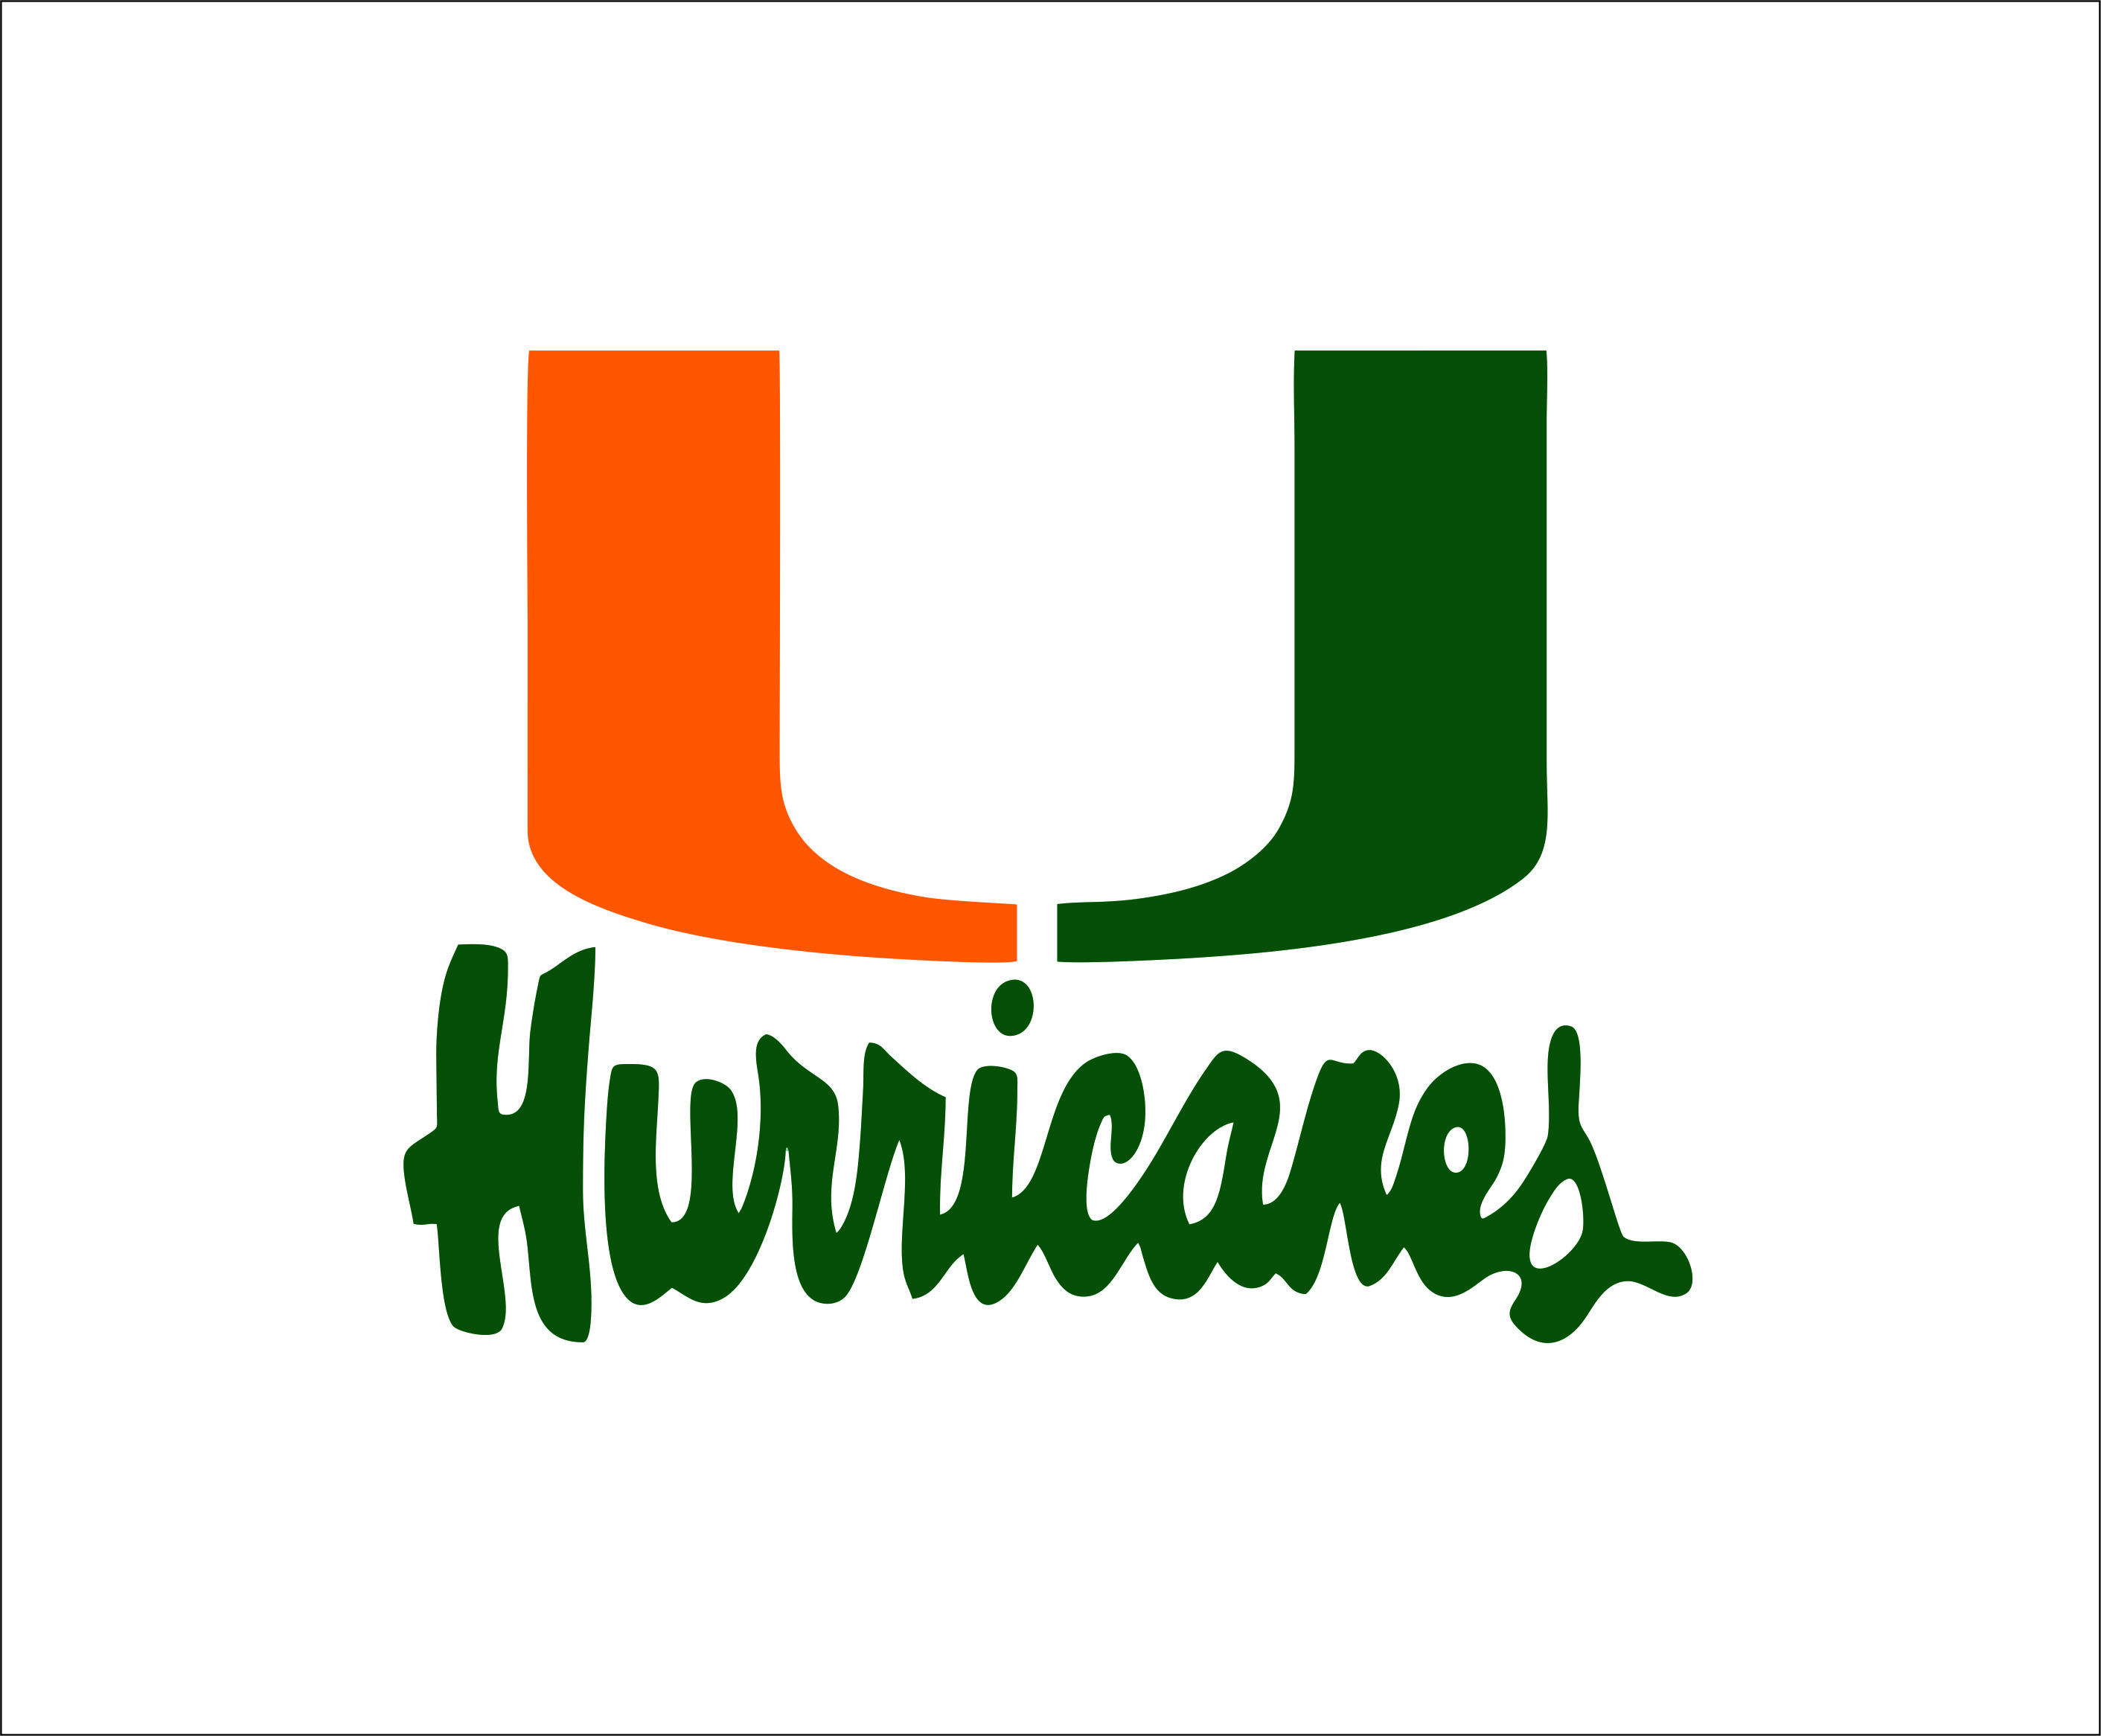 Hurricane Basketball SVG